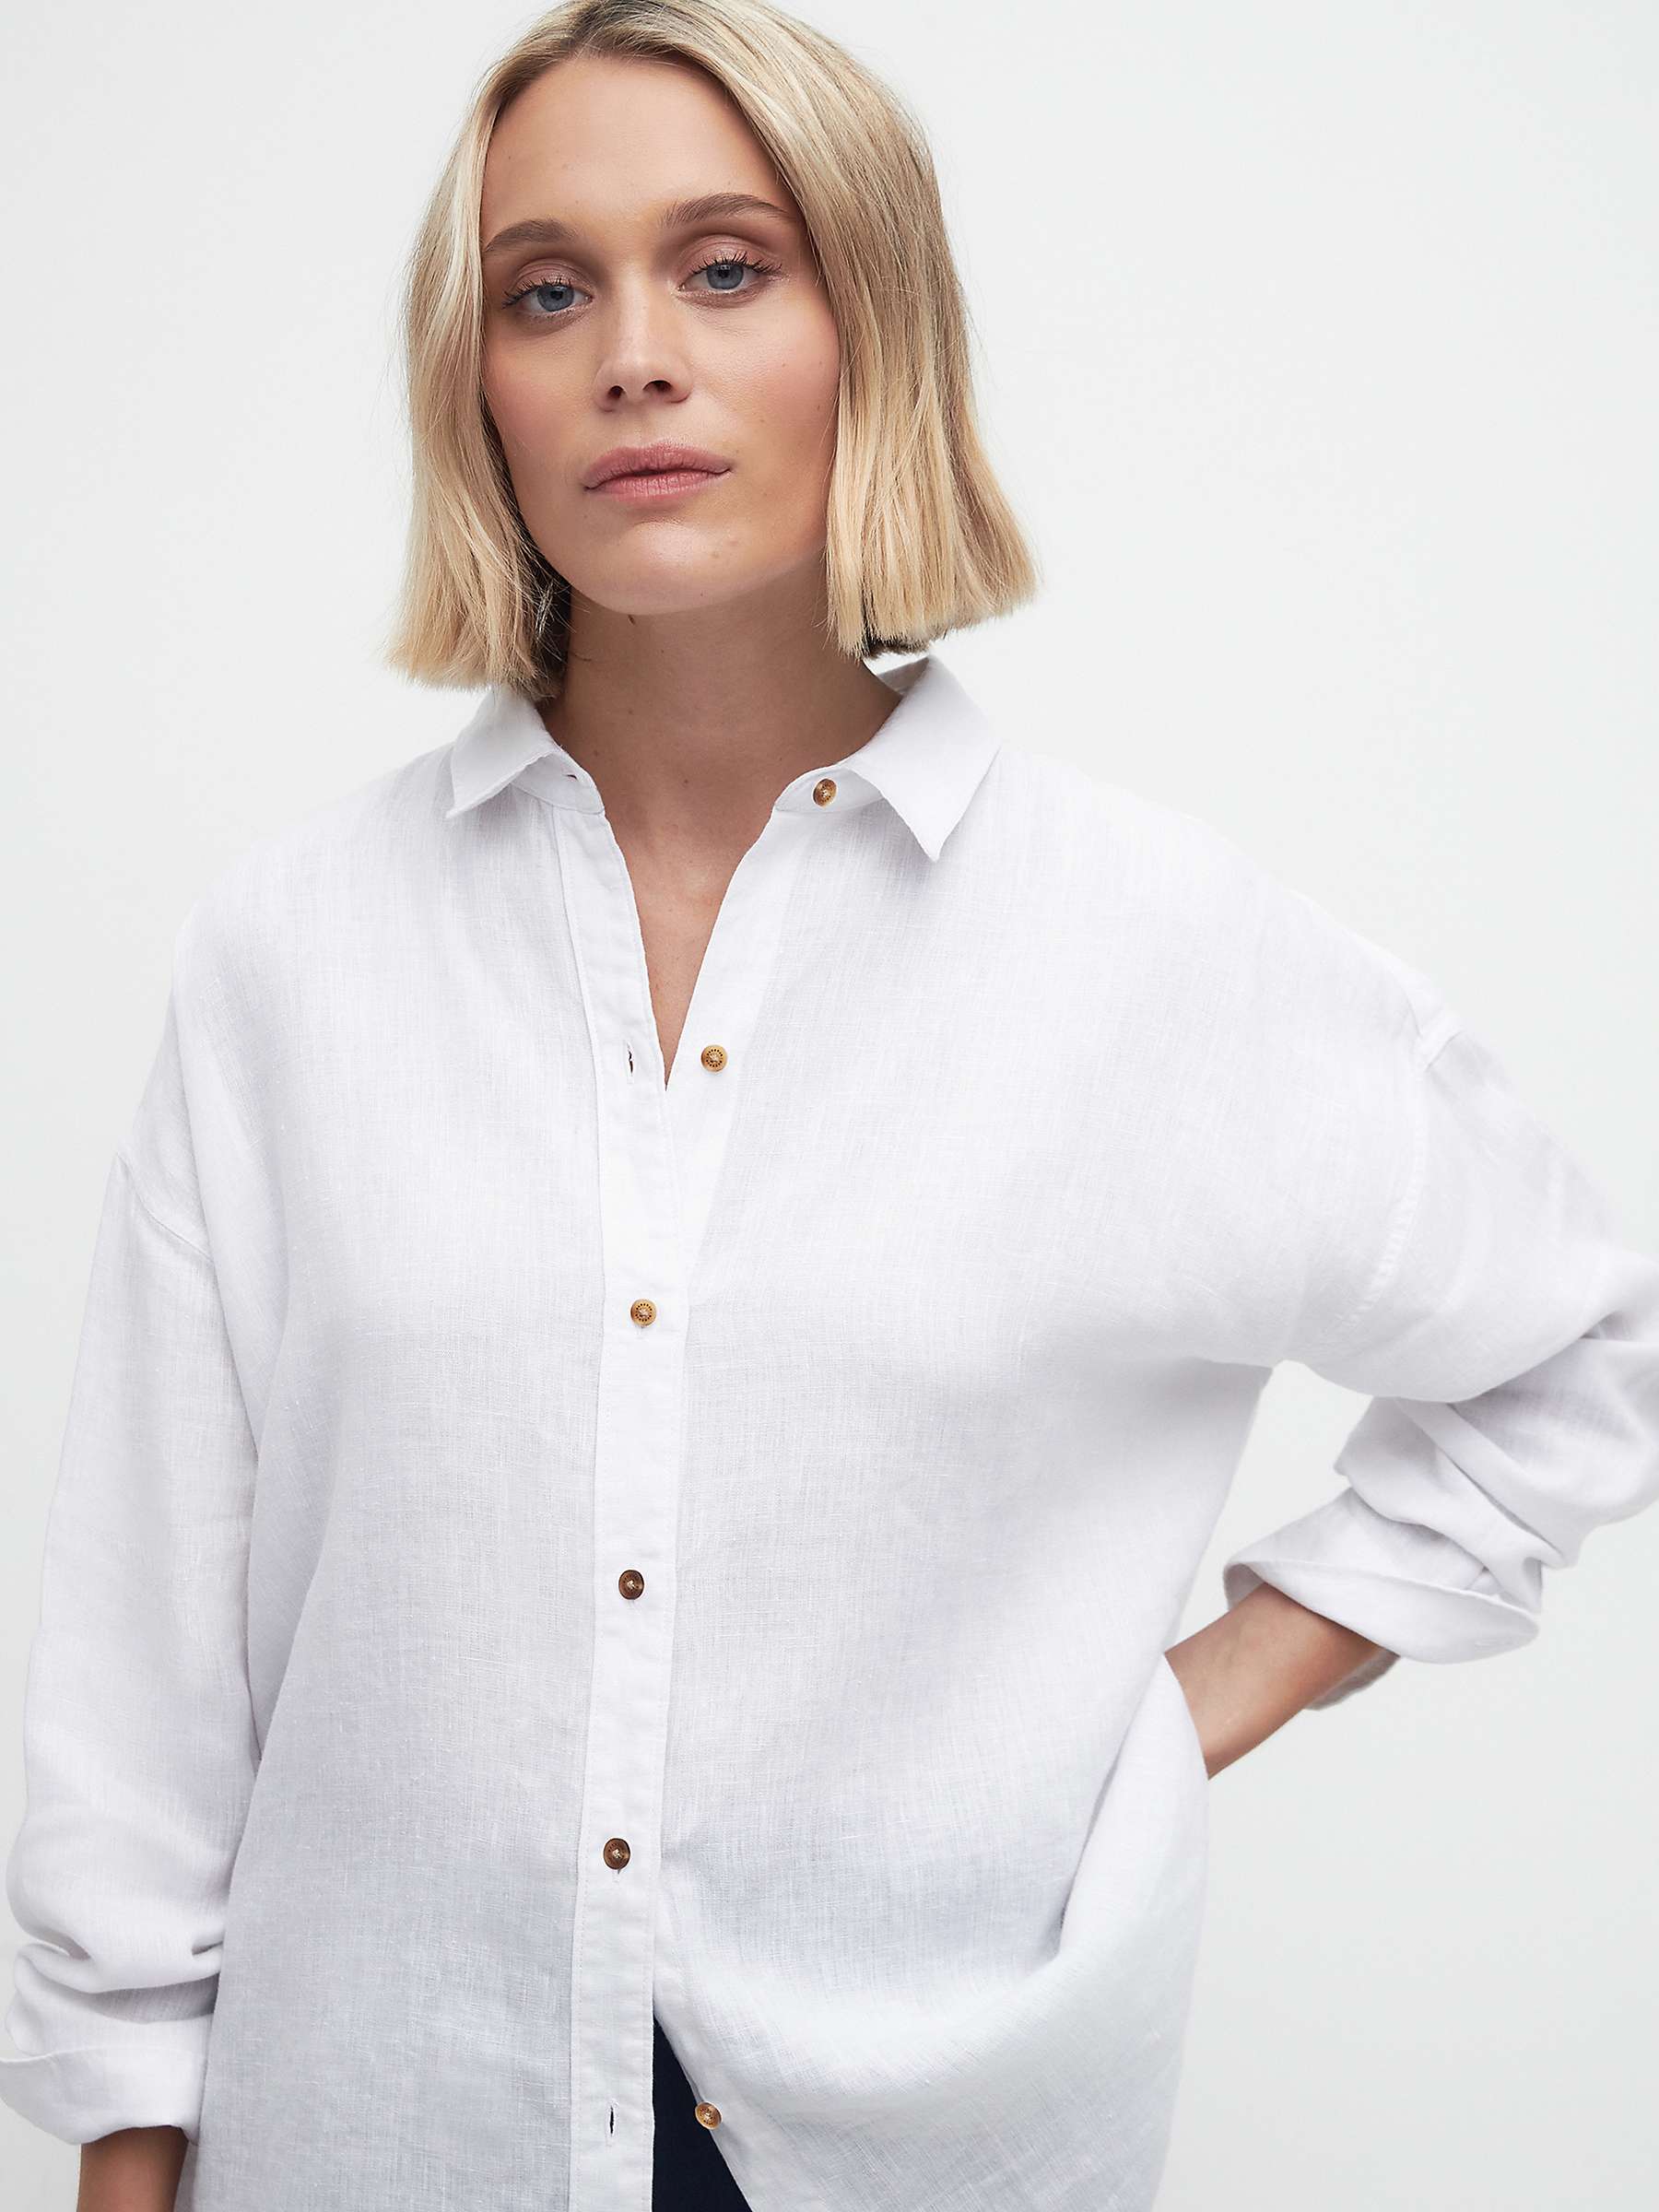 Buy Barbour Hampton Linen Shirt Online at johnlewis.com